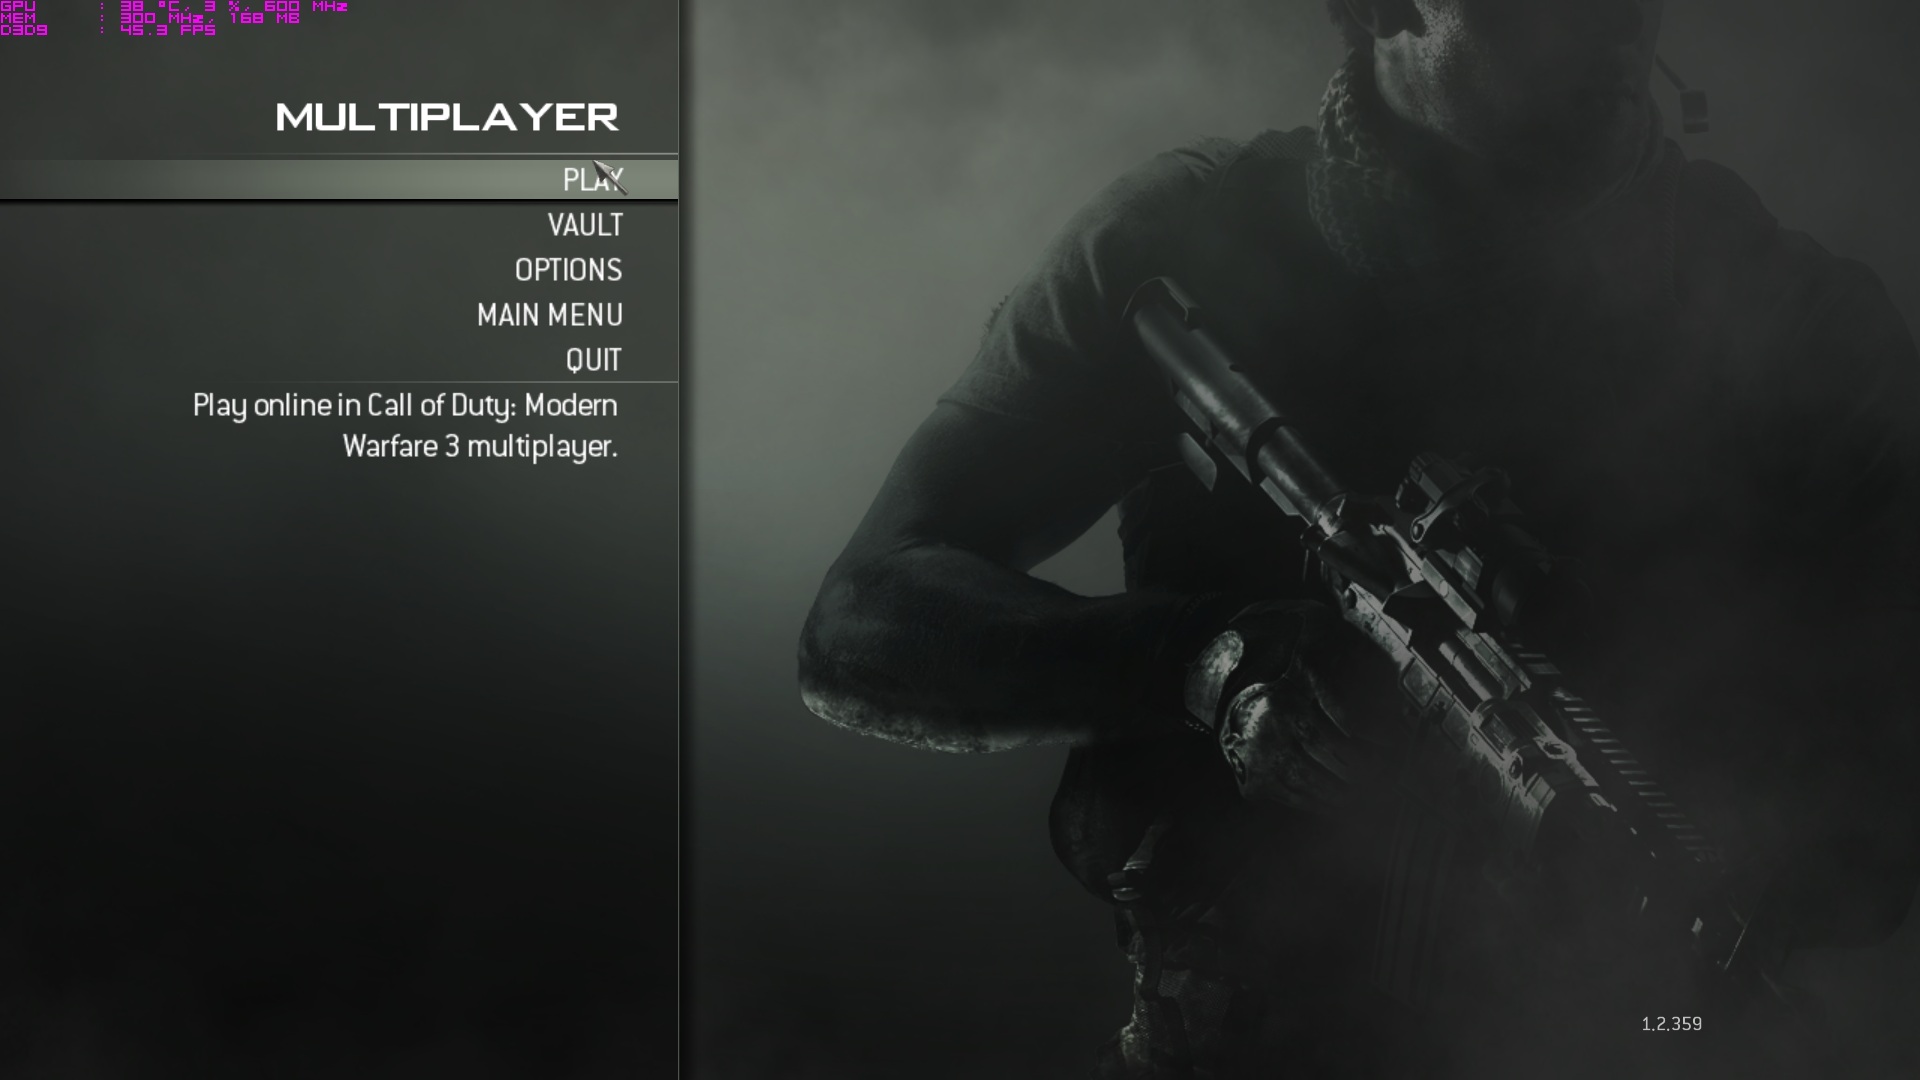 Main menu само. Call of Duty Modern Warfare 3 главное меню. Call of Duty 4 Modern Warfare главное меню. Cod MW 3 главное меню. Мультиплеер для mw3.